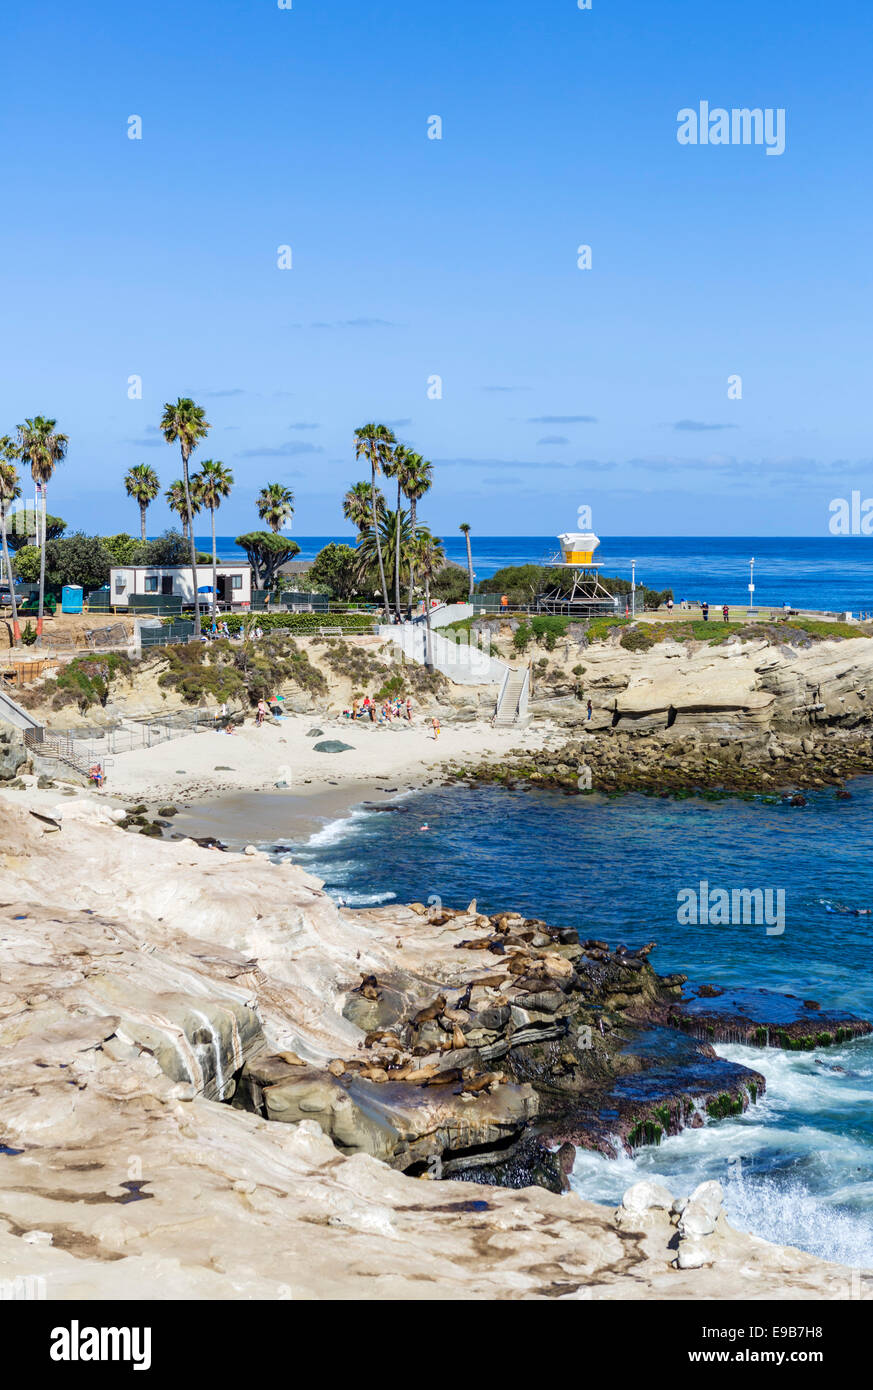 La plage de La Jolla Cove, La Jolla, San Diego County, Californie, USA Banque D'Images